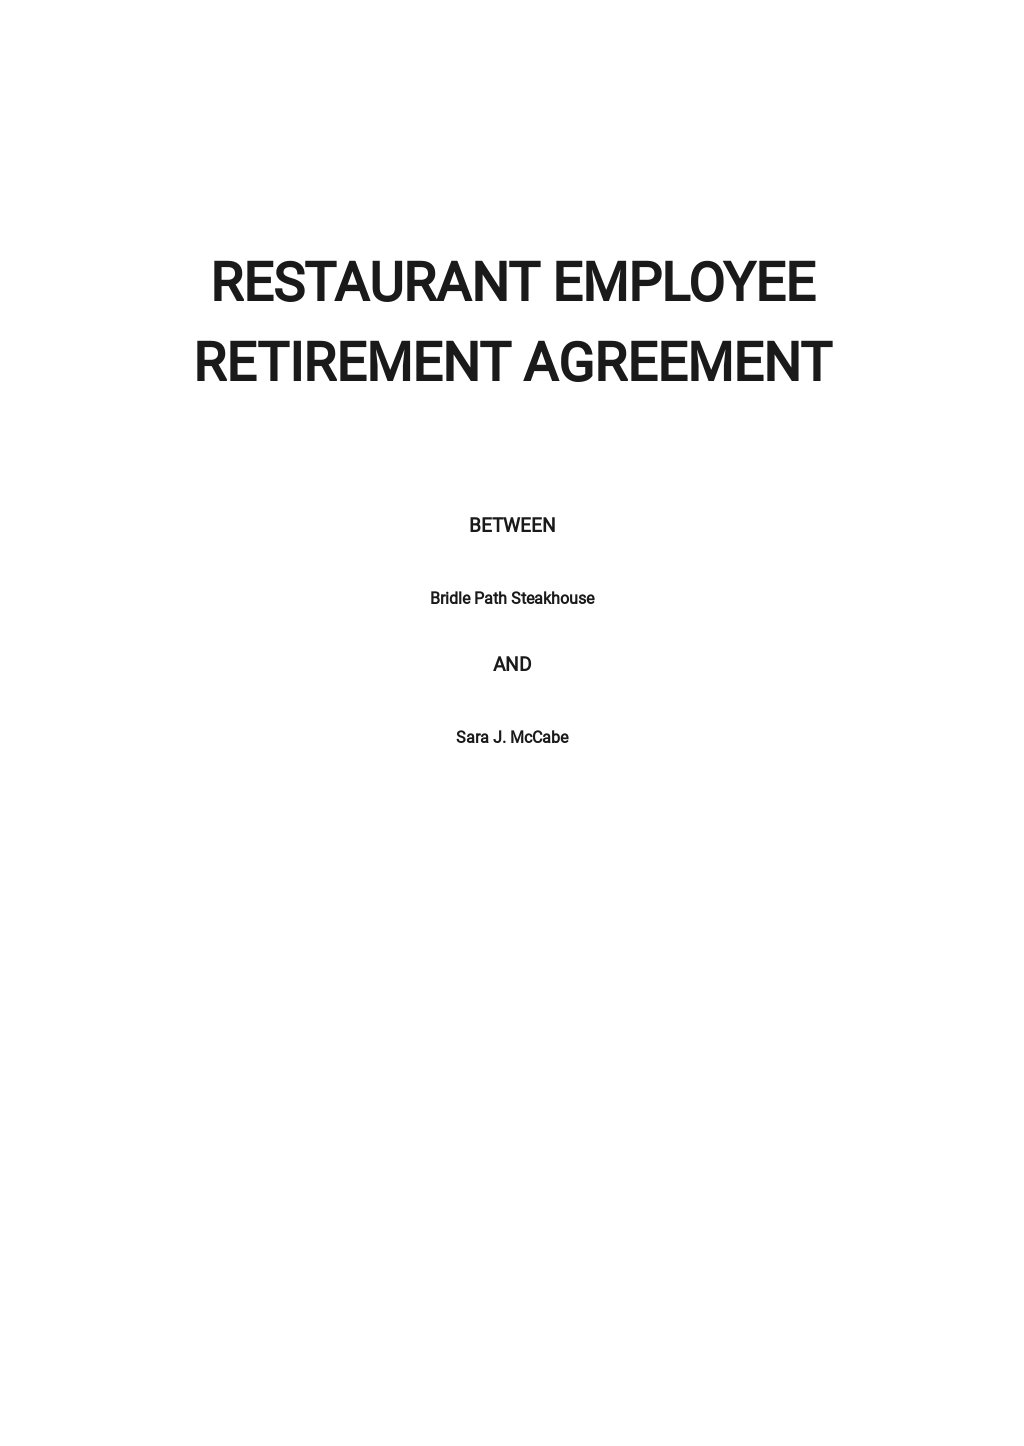 Restaurant Employee Retirement Agreement Template.jpe